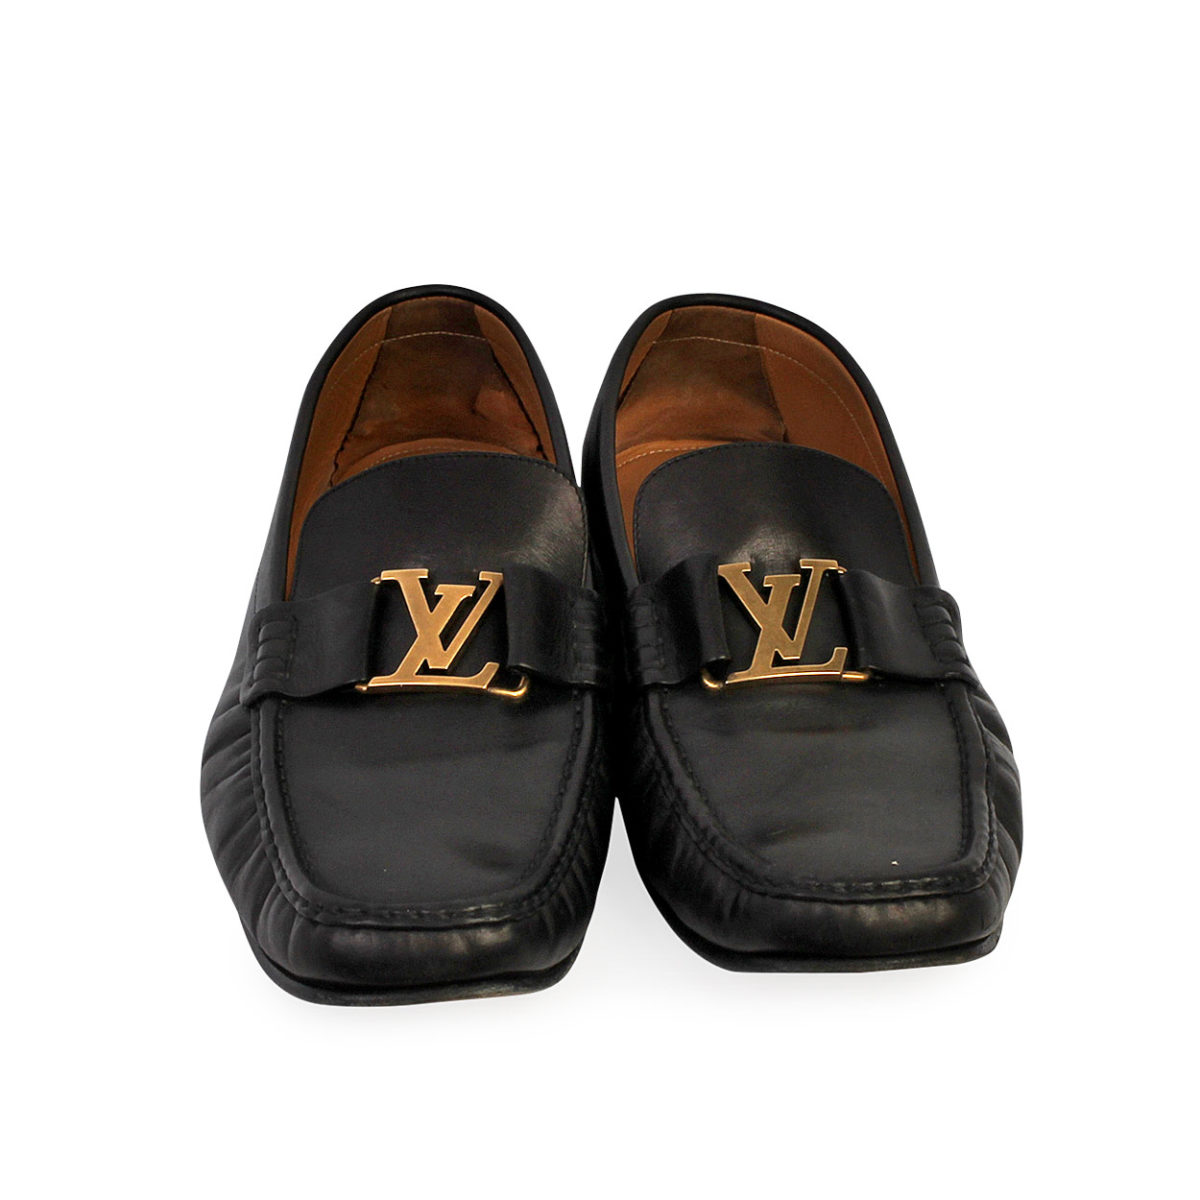 Louis Vuitton Monte Carlo Moccasin BLACK. Size 11.0